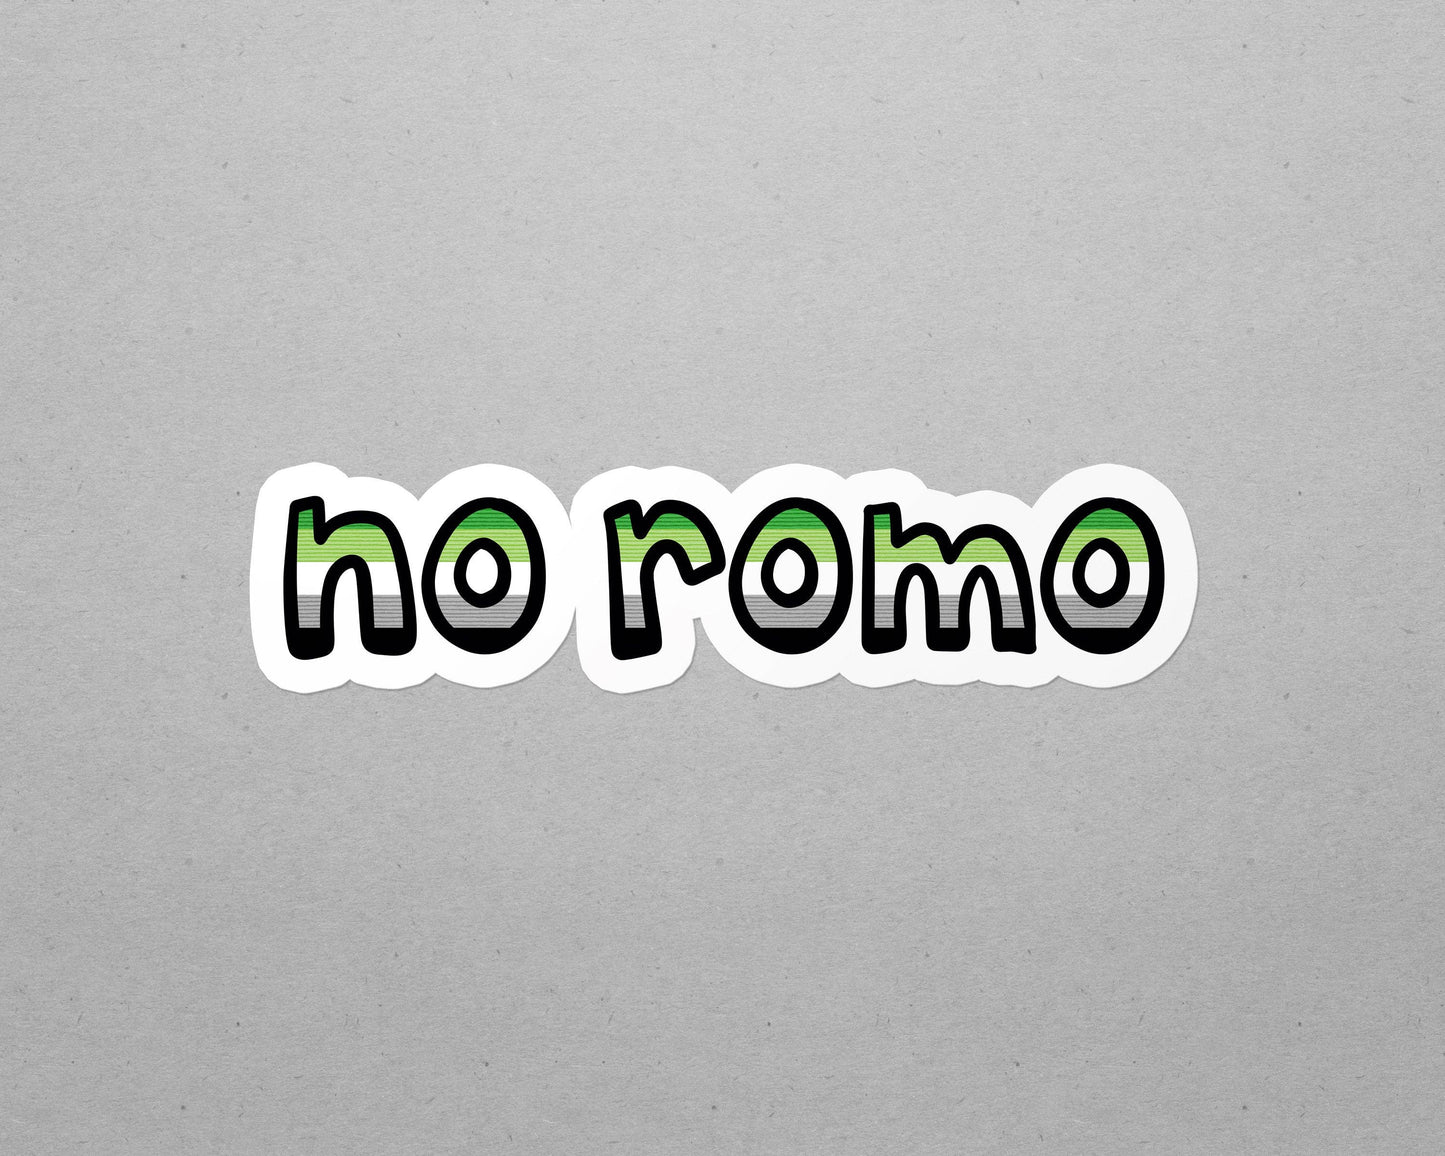 Aromantic No Romo Waterproof LGBTQ+ Sticker